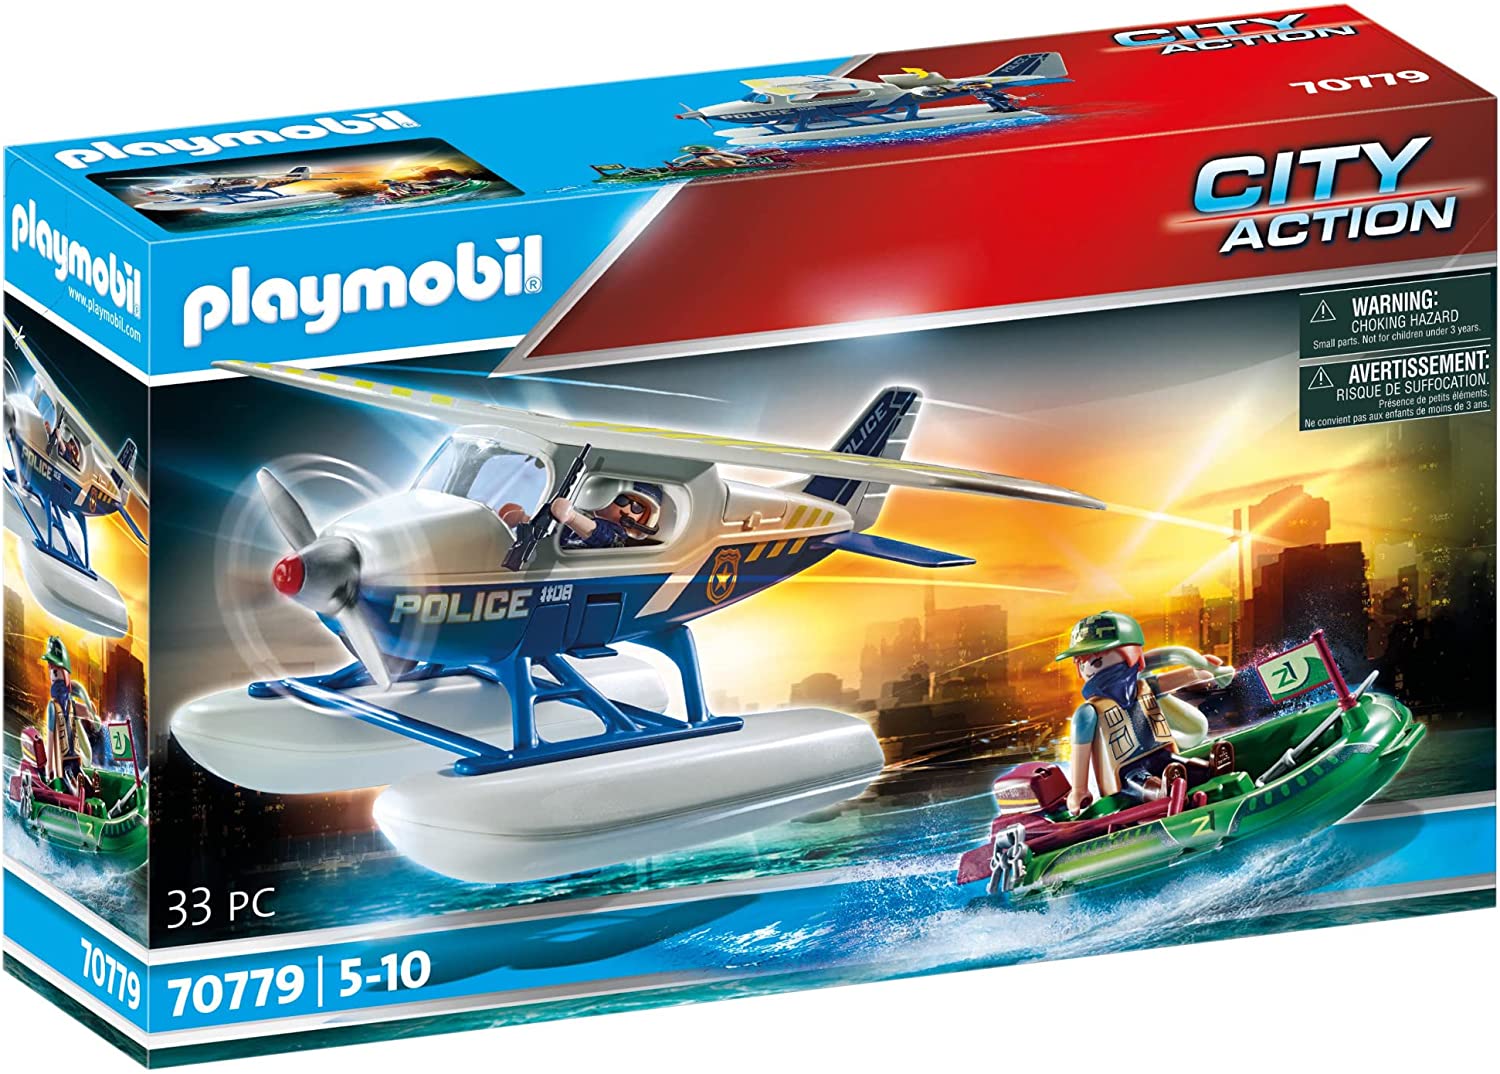 Playmobil Police Seapplane: Smugglers Chase